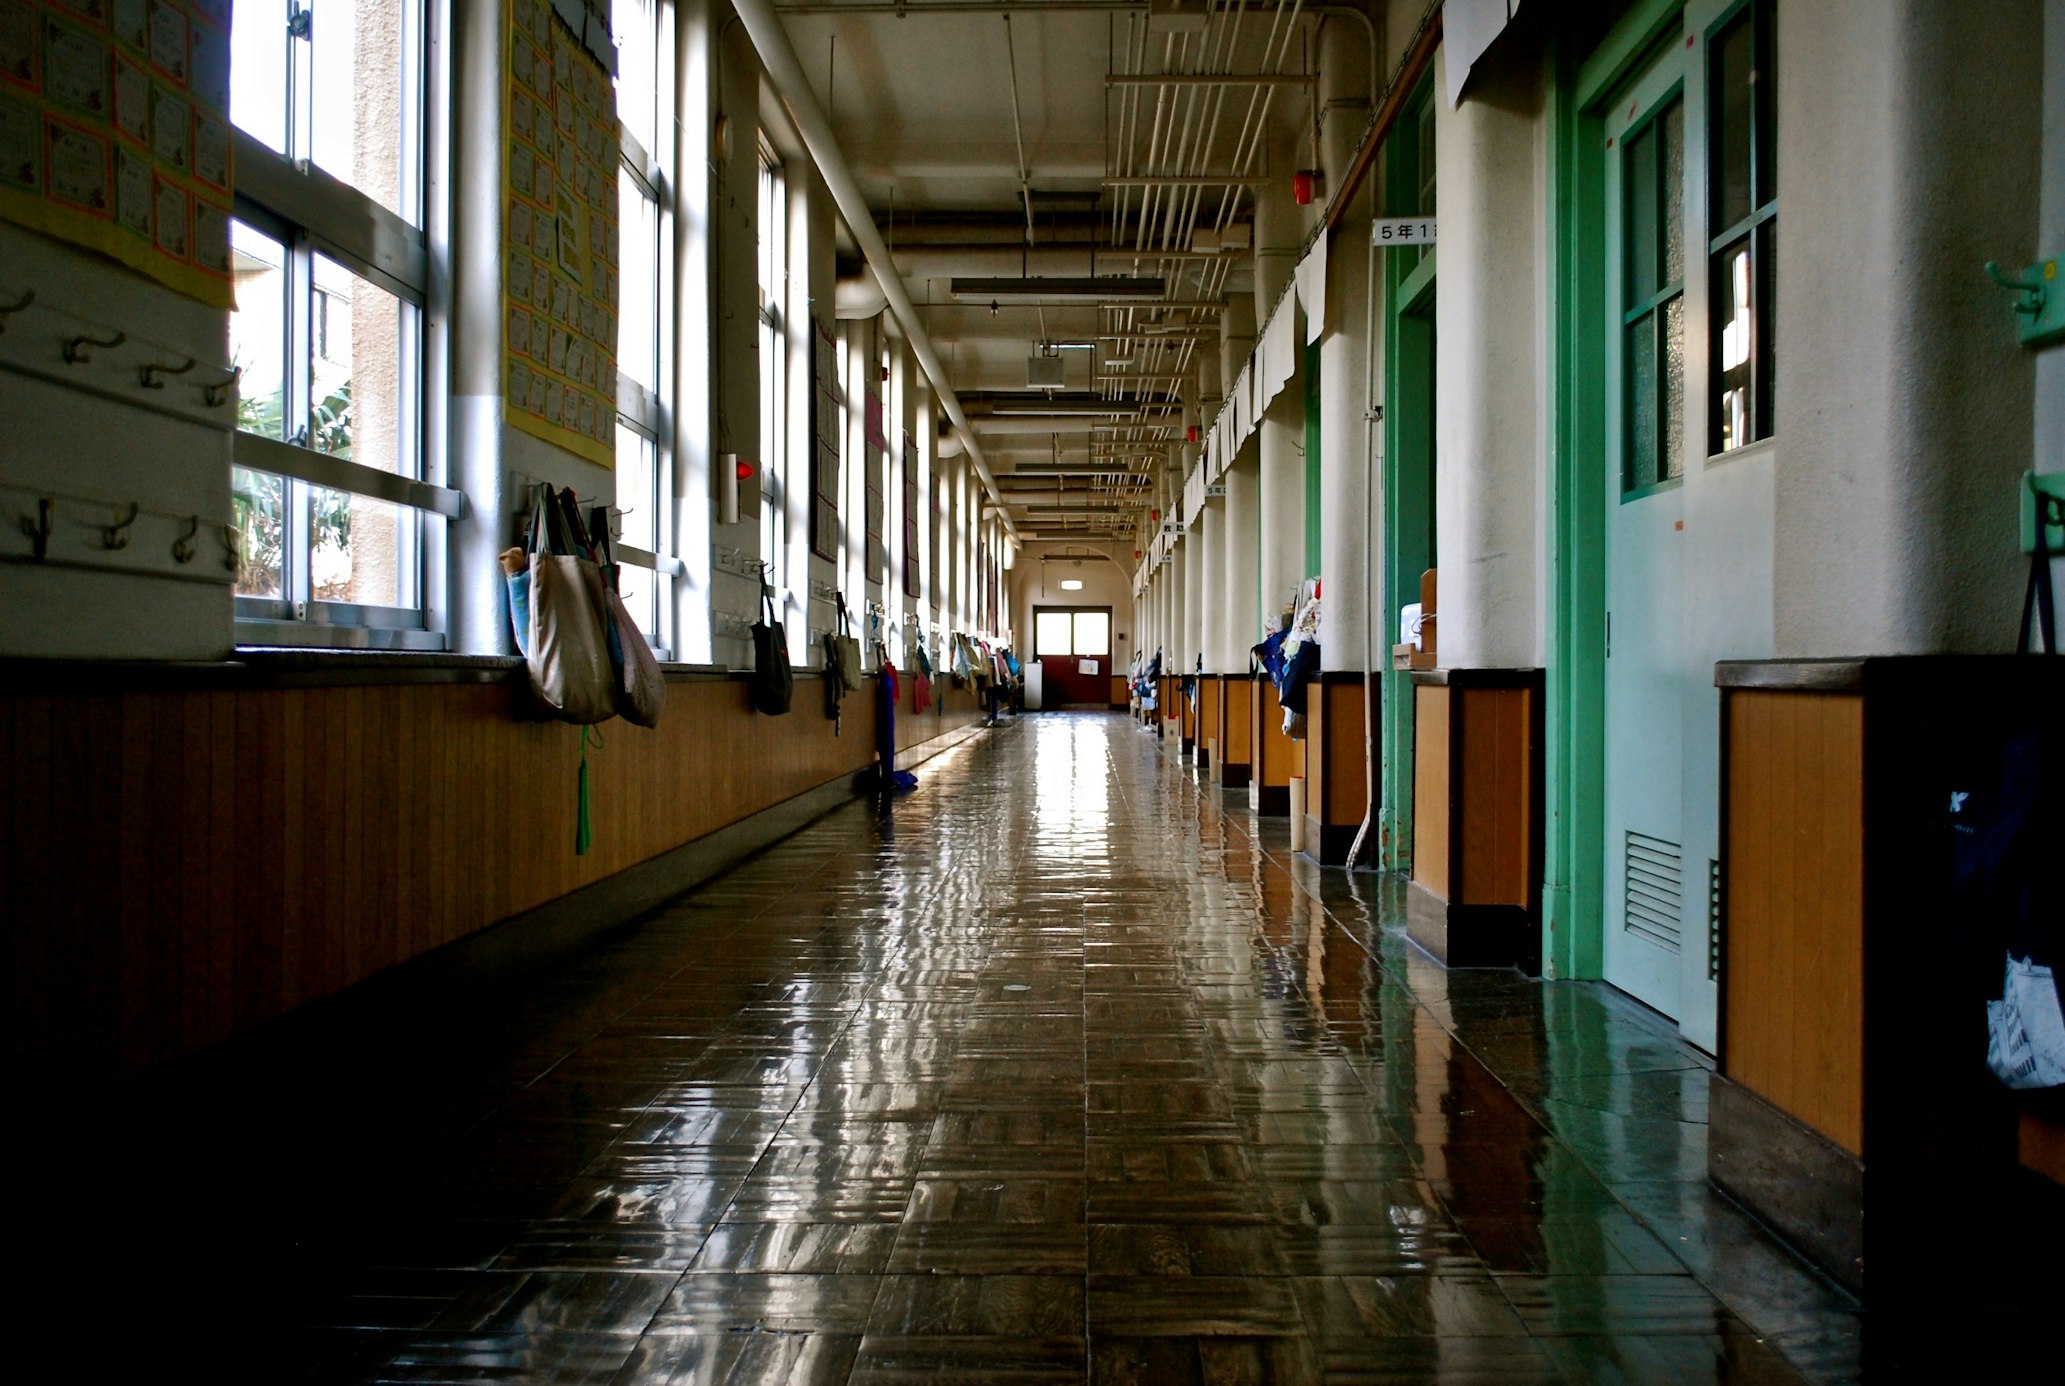 A school hallway (kyo azuma via Unsplash)